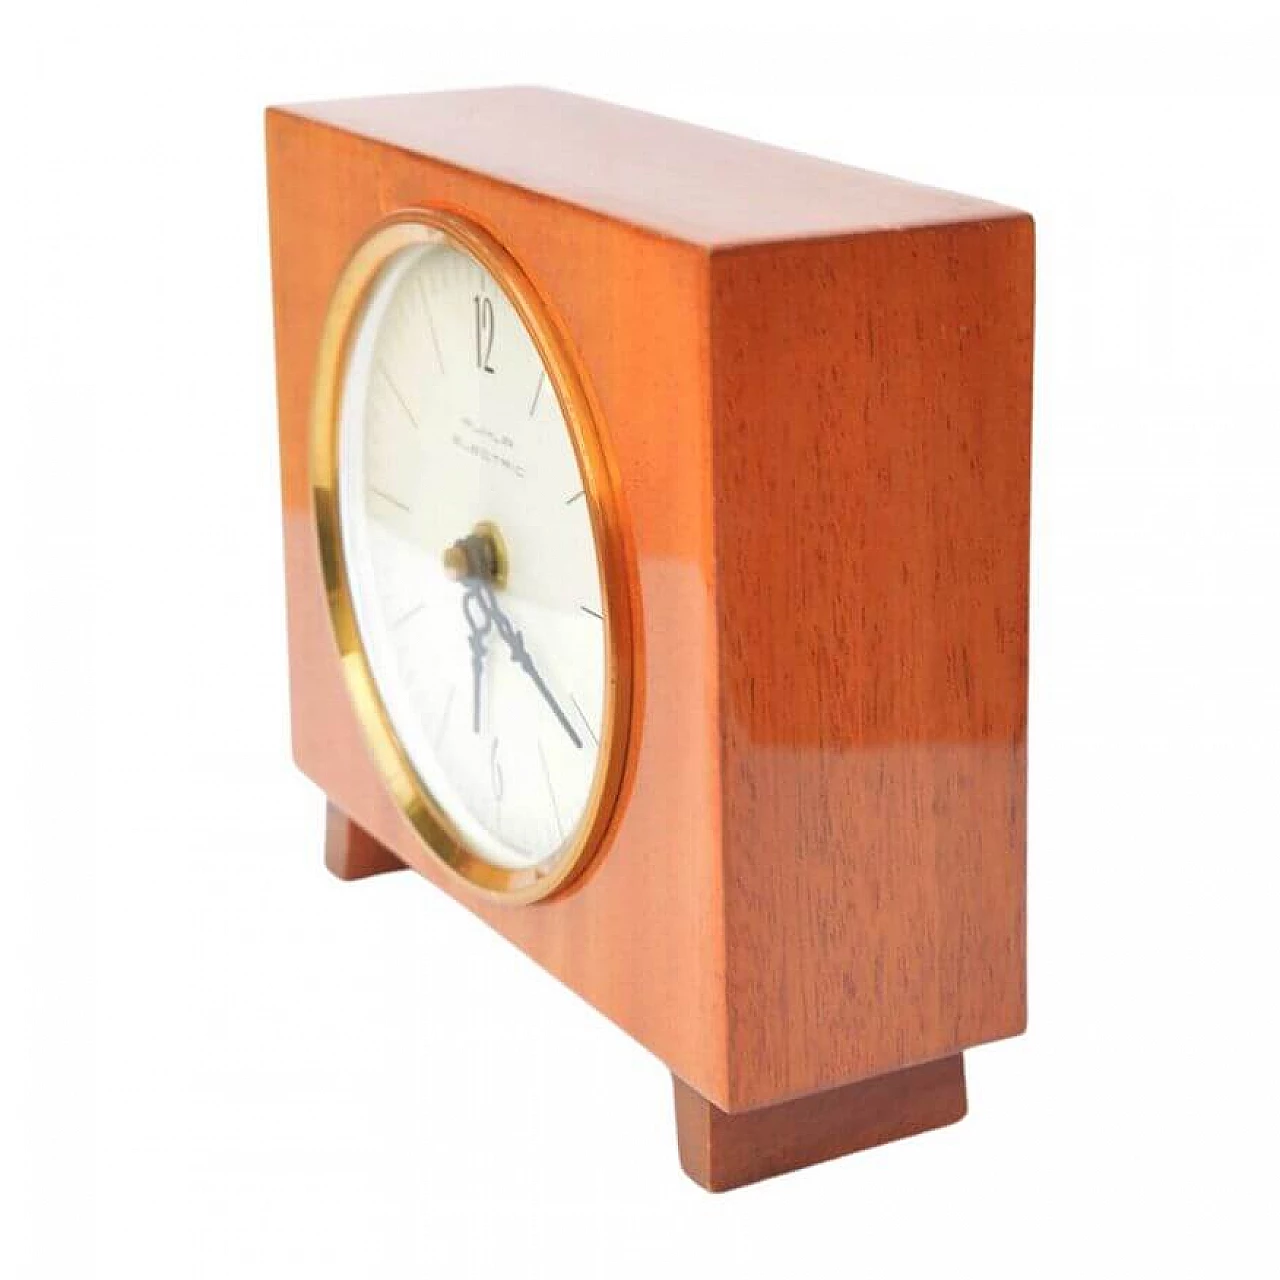 Mahogany veneered wood mantel clock by Ruhla, 1970s 10